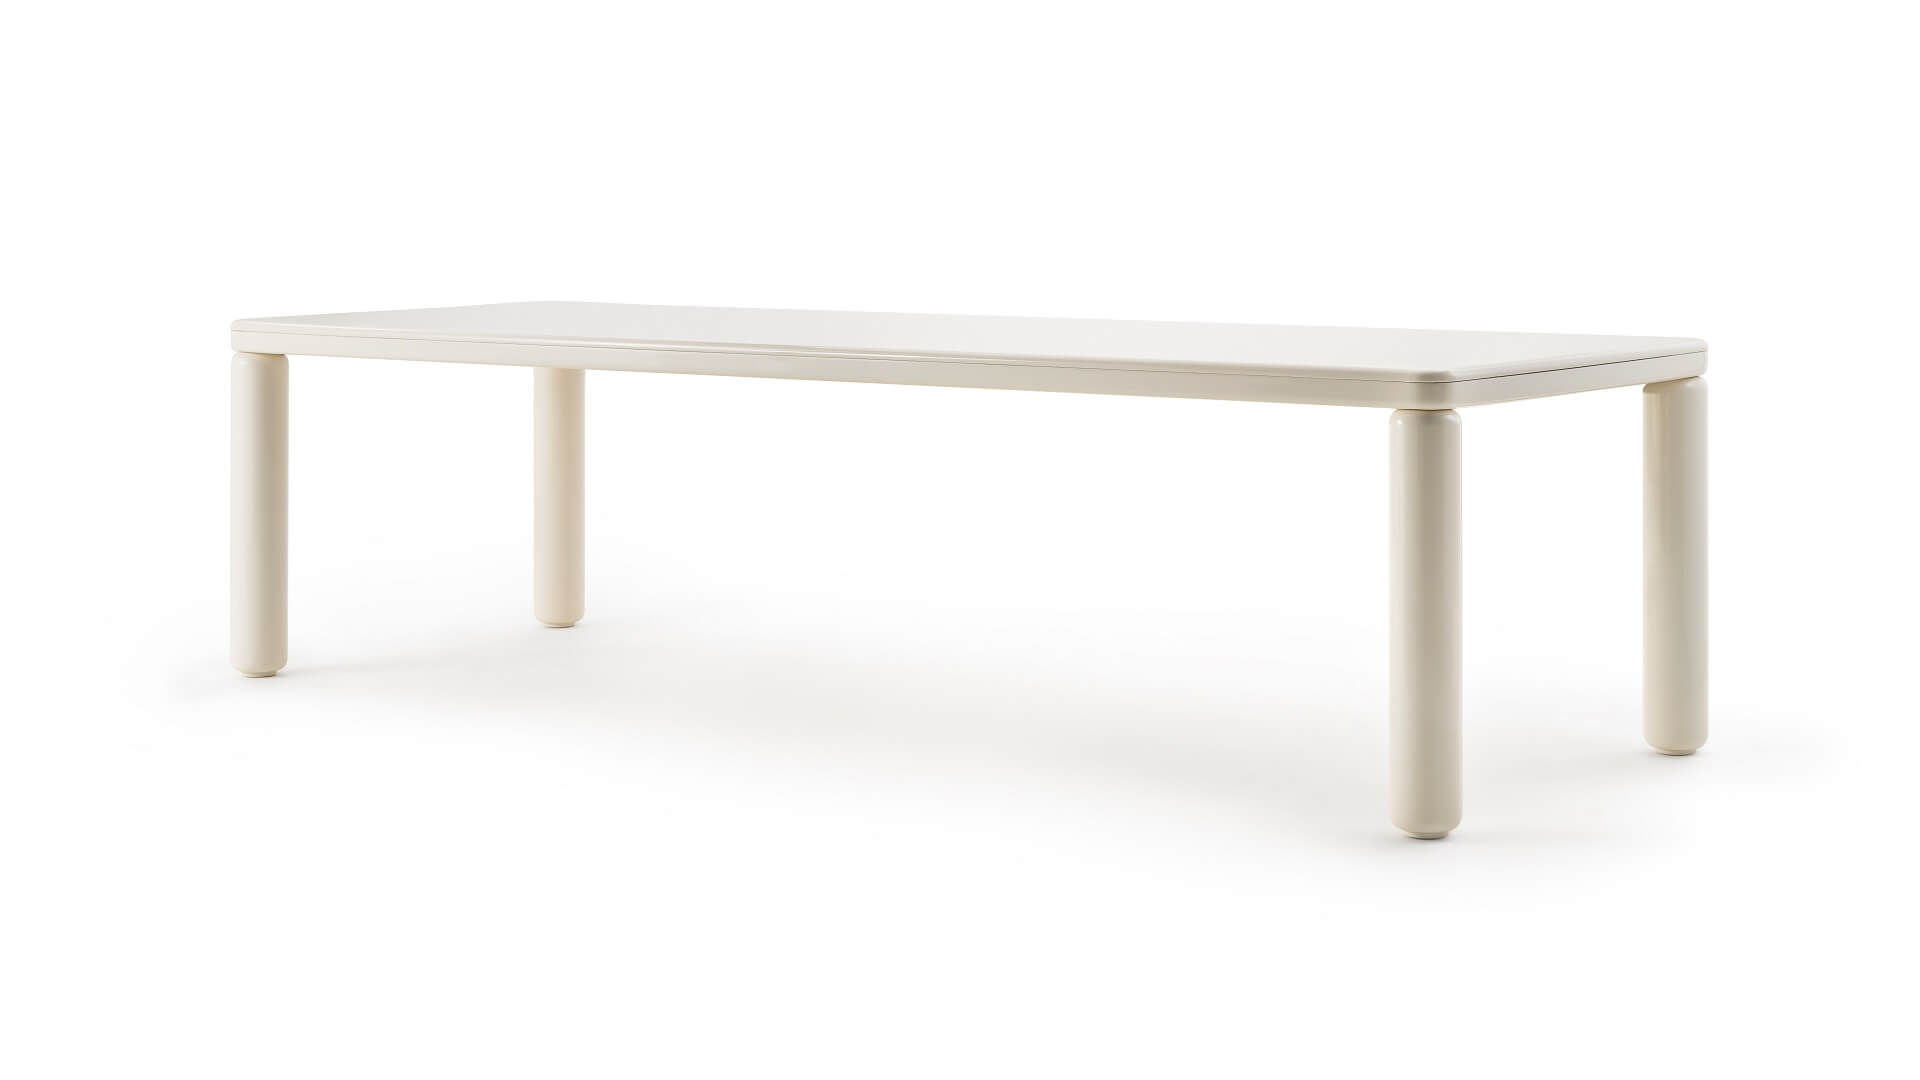 Turri_Roma_Monica Armani_ rec wooden table